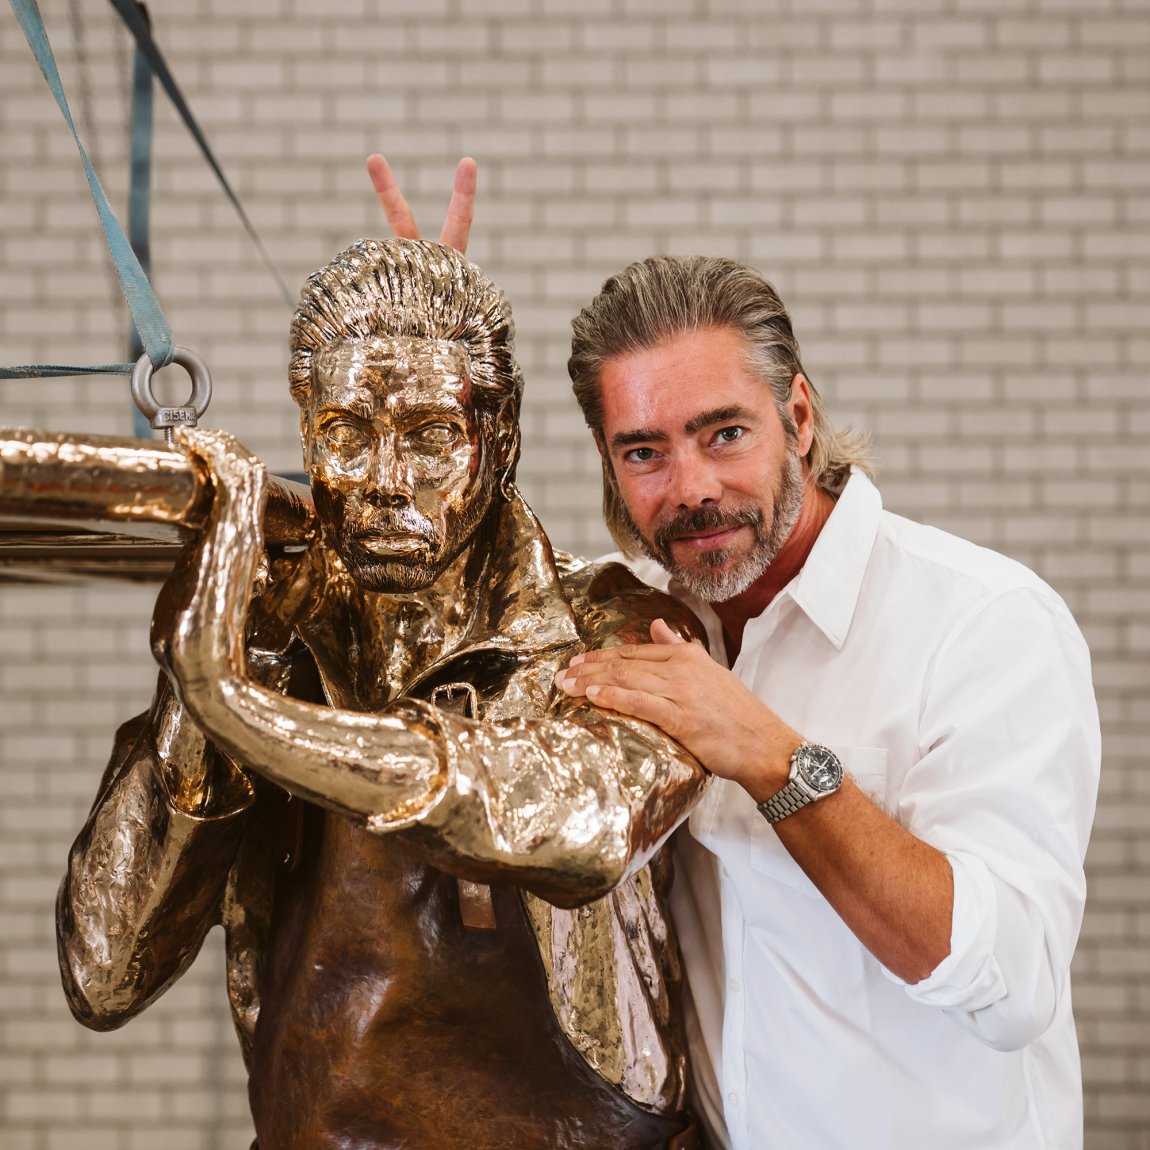 Portraitphoto Job Smeets makes at bronze statue makes rabbit ears